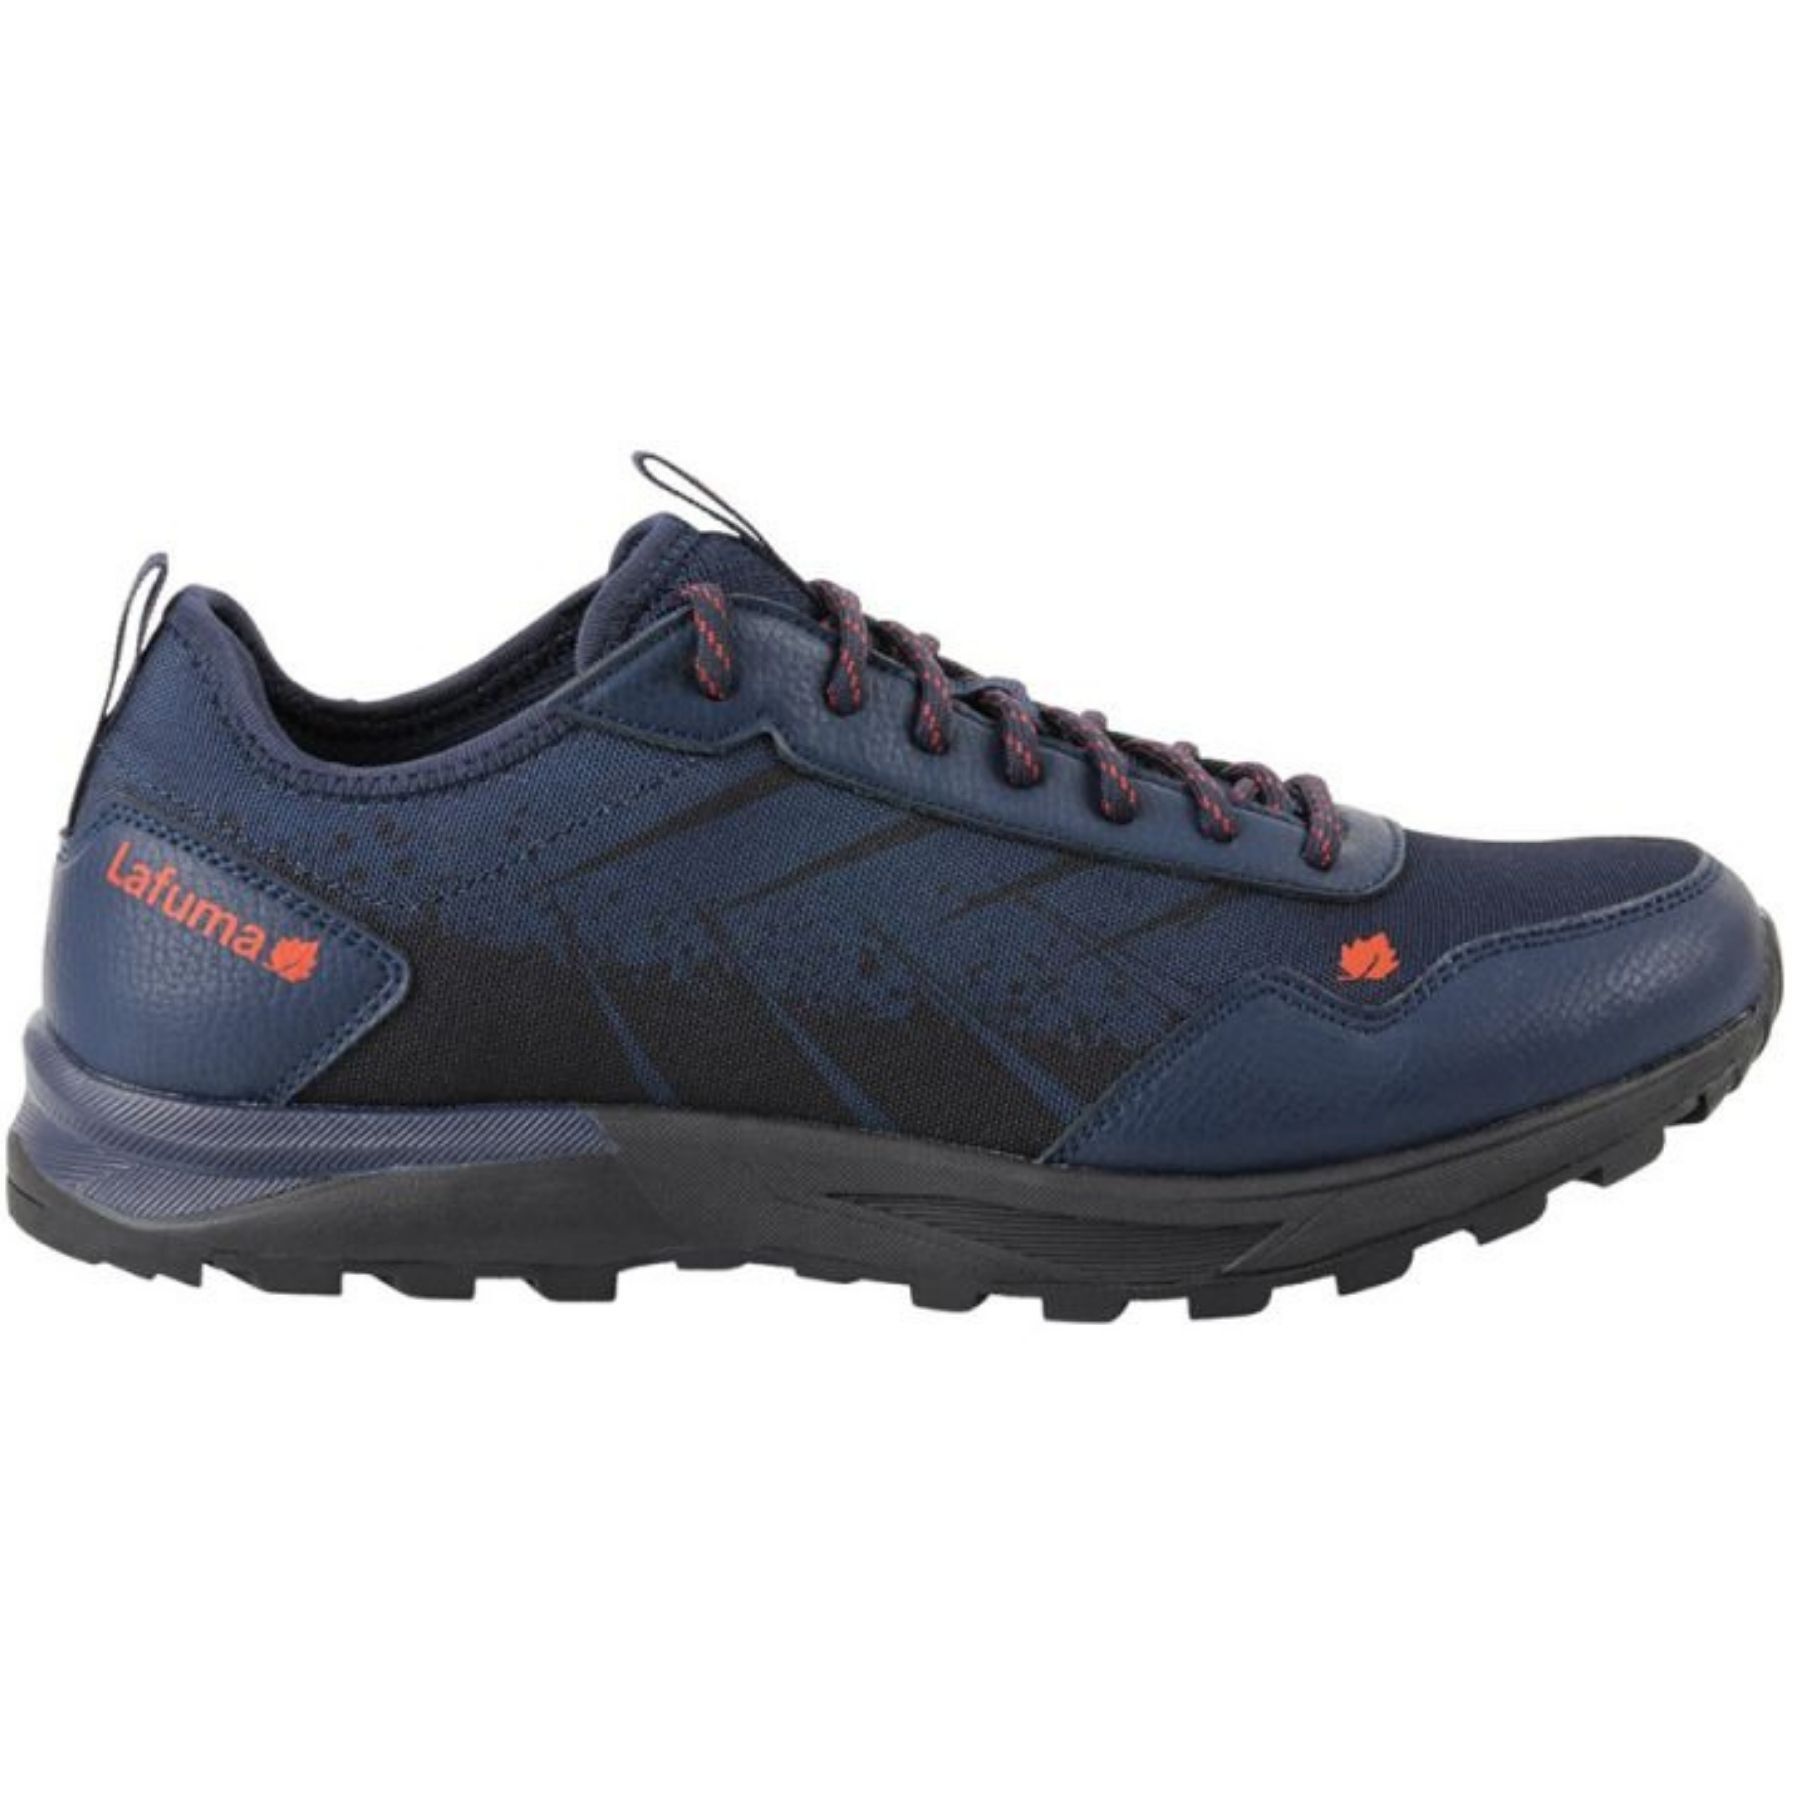 Lafuma Active - Hiking shoes - Men's